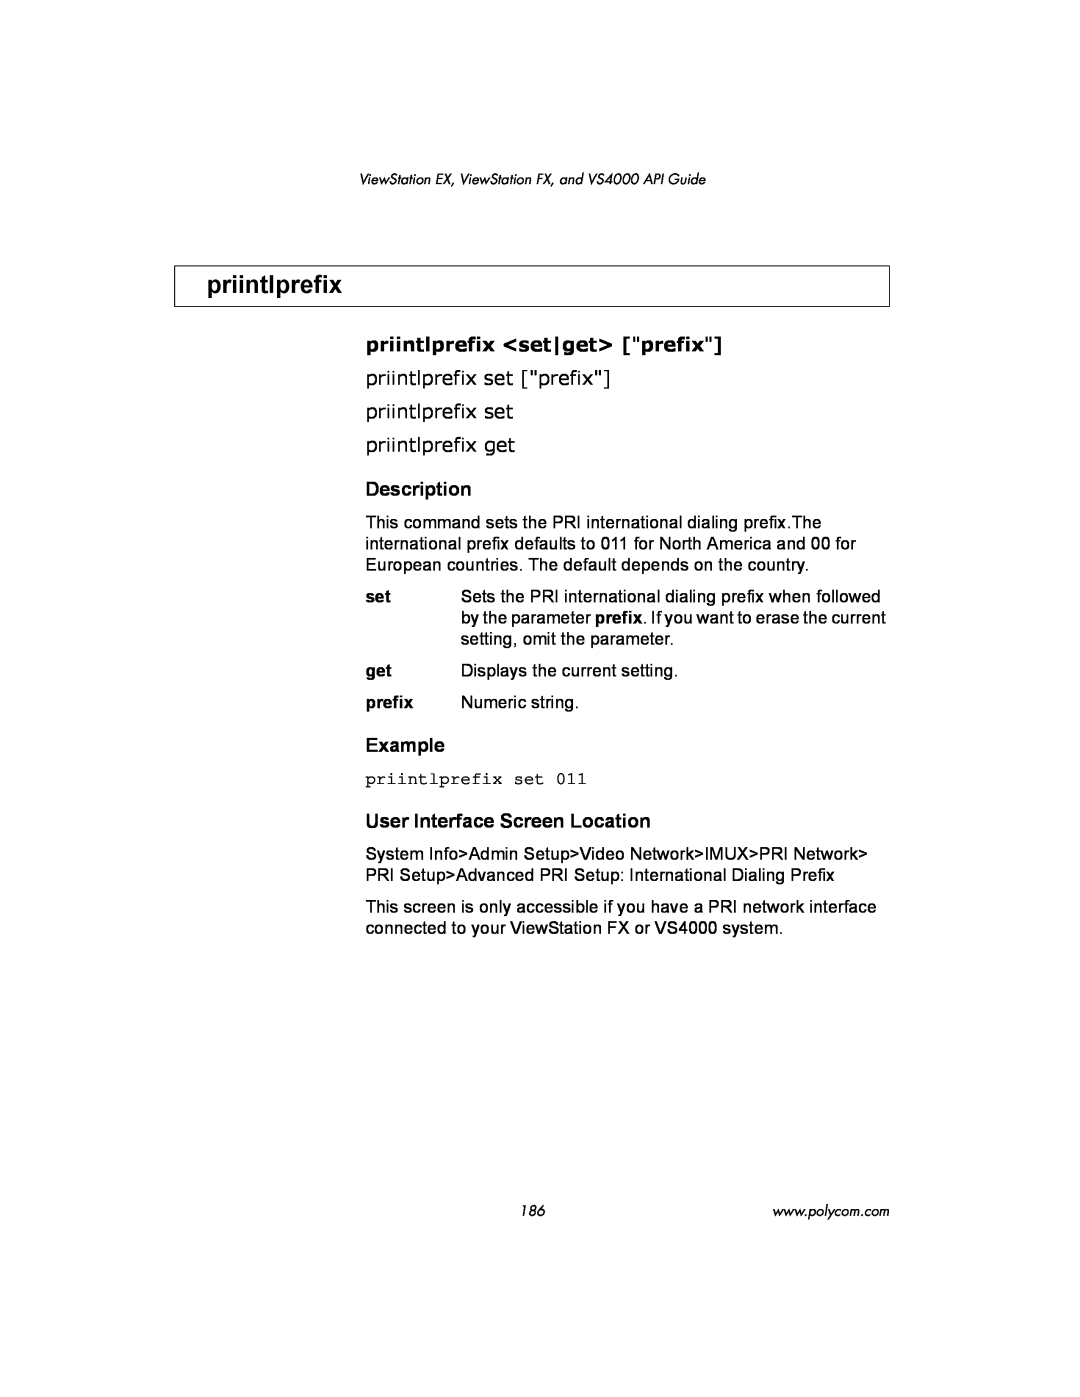 Polycom VIEWSTATION EX manual priintlprefix <set|get> prefix, Description, Example, User Interface Screen Location 